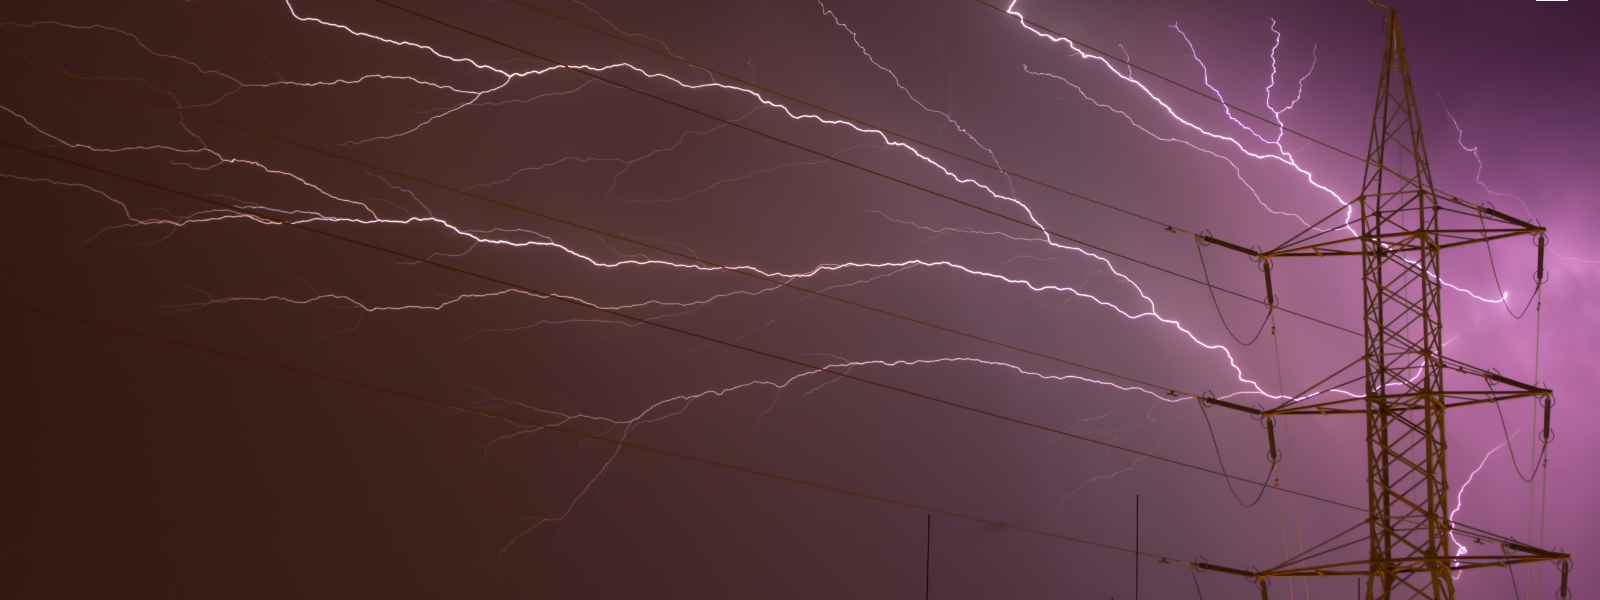 Lightning behind power lines